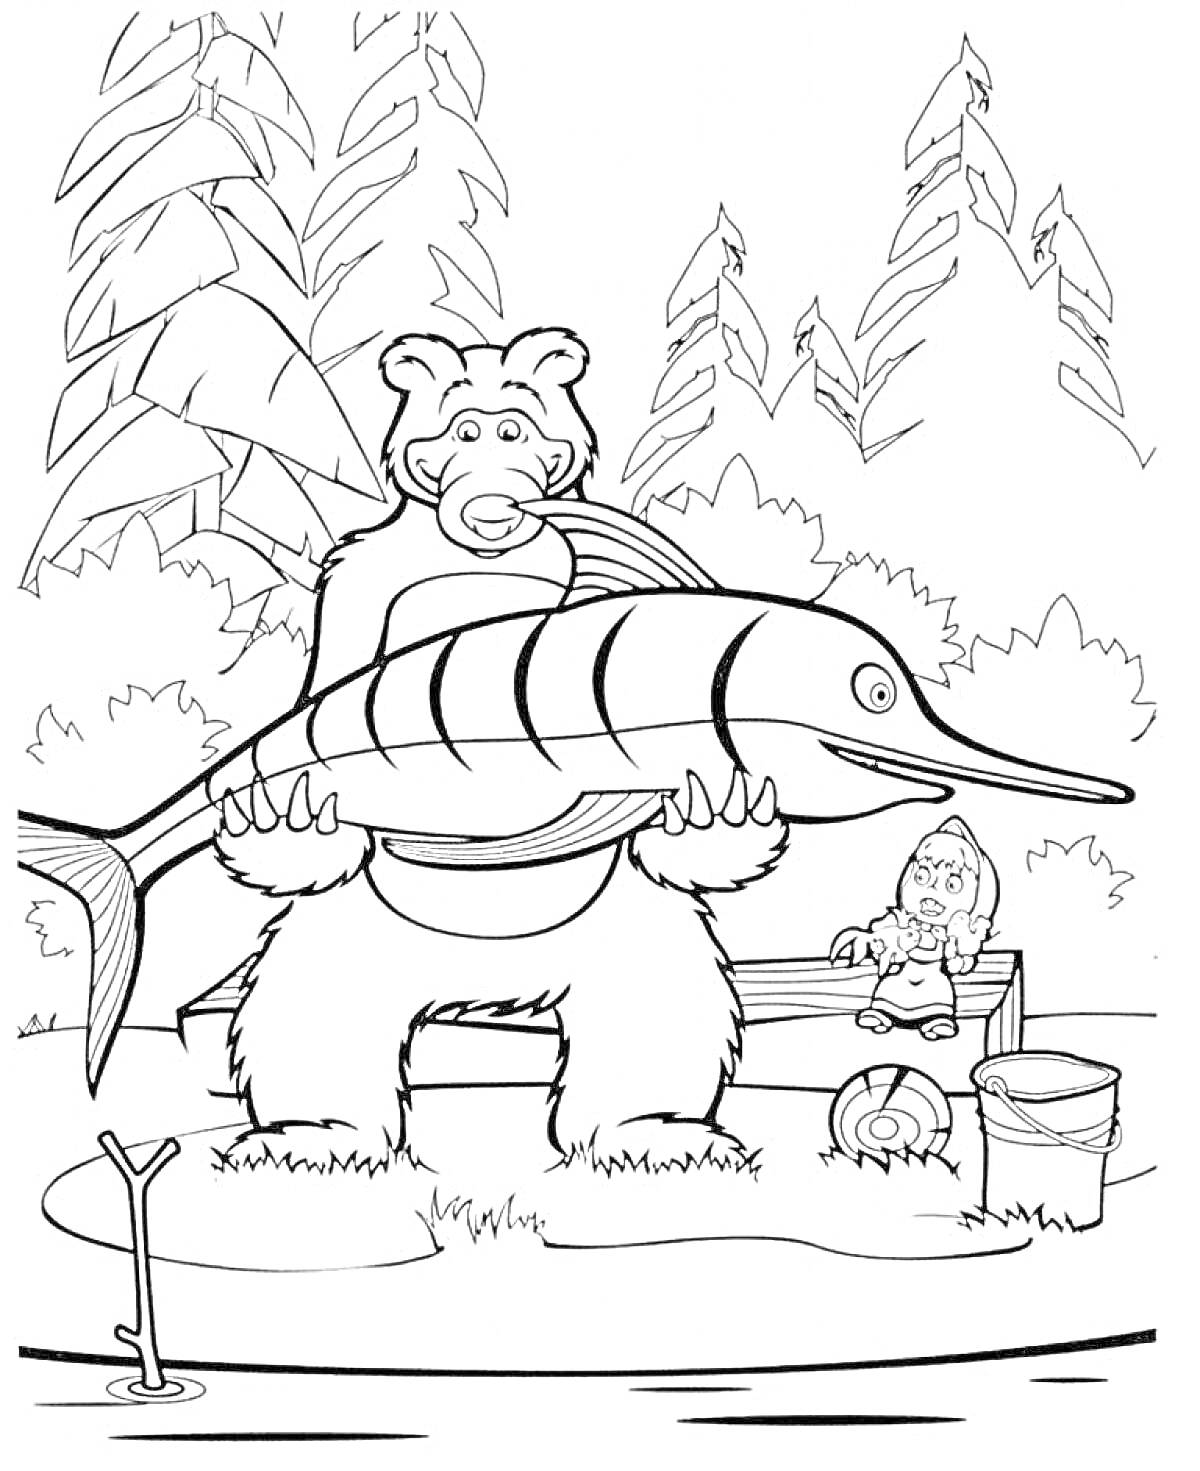 Раскраска Миша с пойманной рыбой, Маша на скамейке, лес на заднем плане